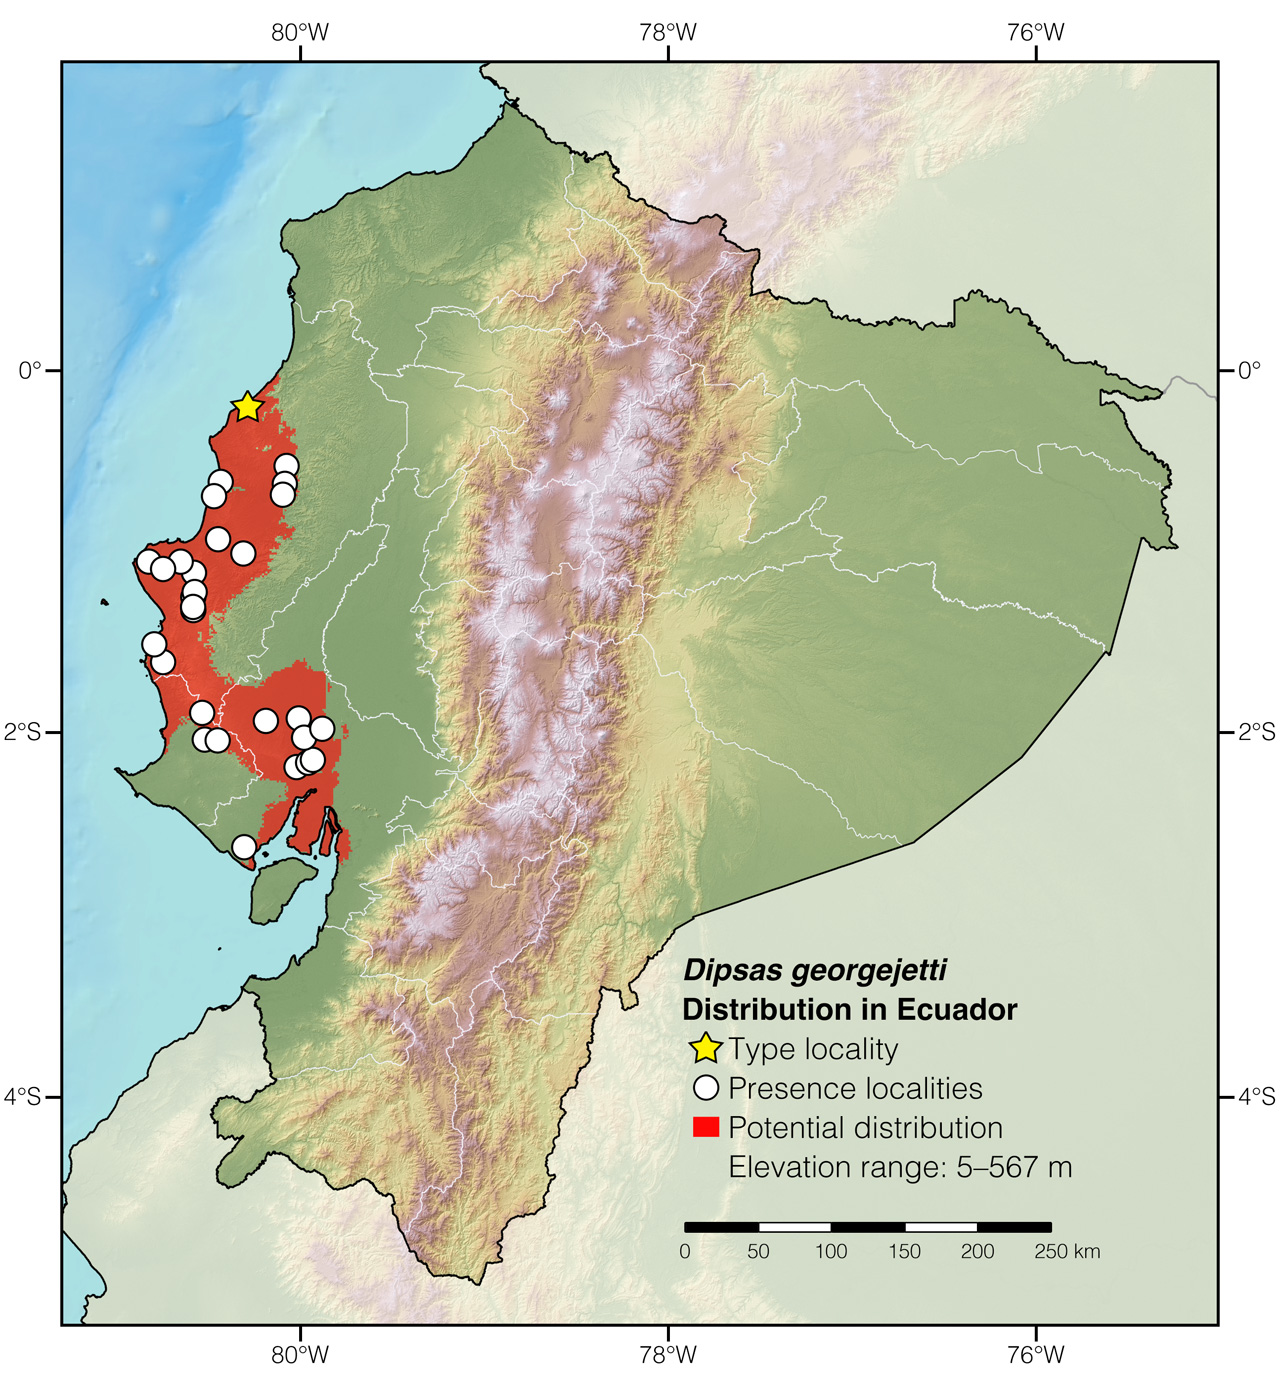 Distribution of Dipsas georgejetti in Ecuador